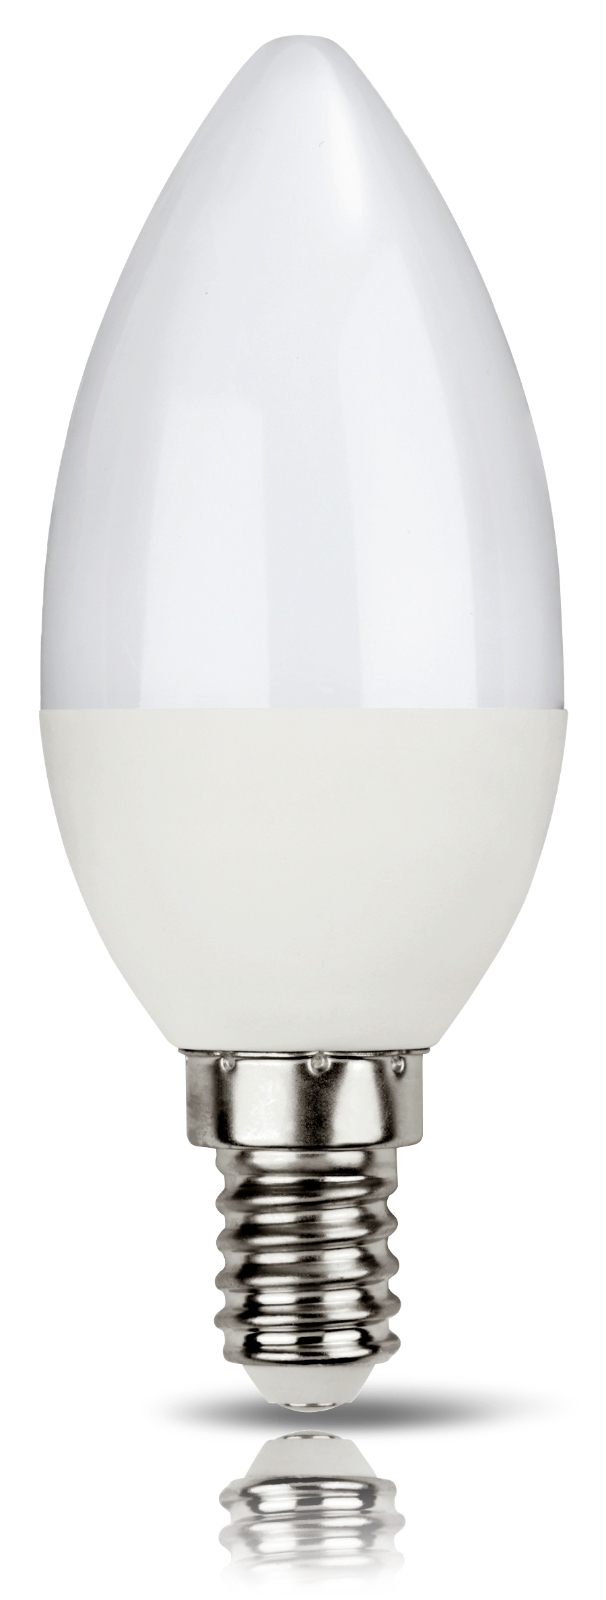 Bellight LED E14 C35 Kerzenform 5W = 40W 230V  Leuchtmittel 400lm 200° Kaltweiß 6500K